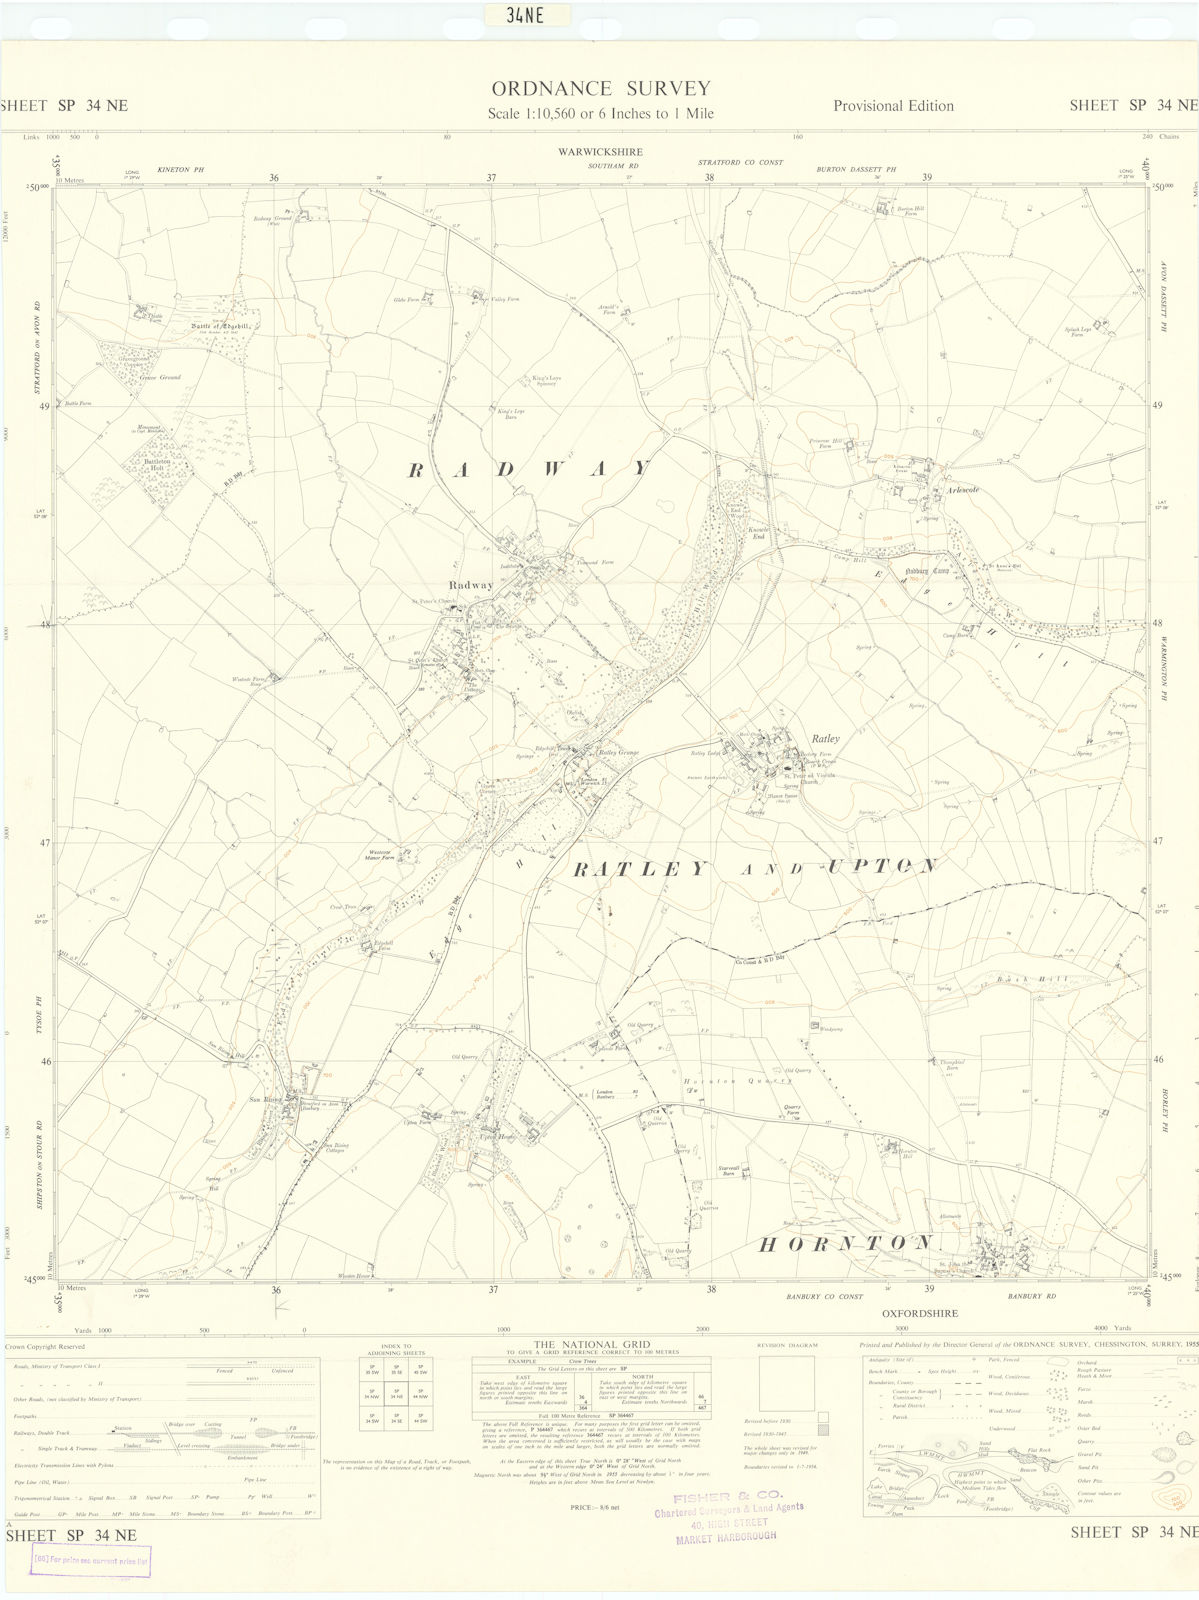 Ordnance Survey Sheet SP34NE Warwickshire Radway Ratley Hornton 1955 old map